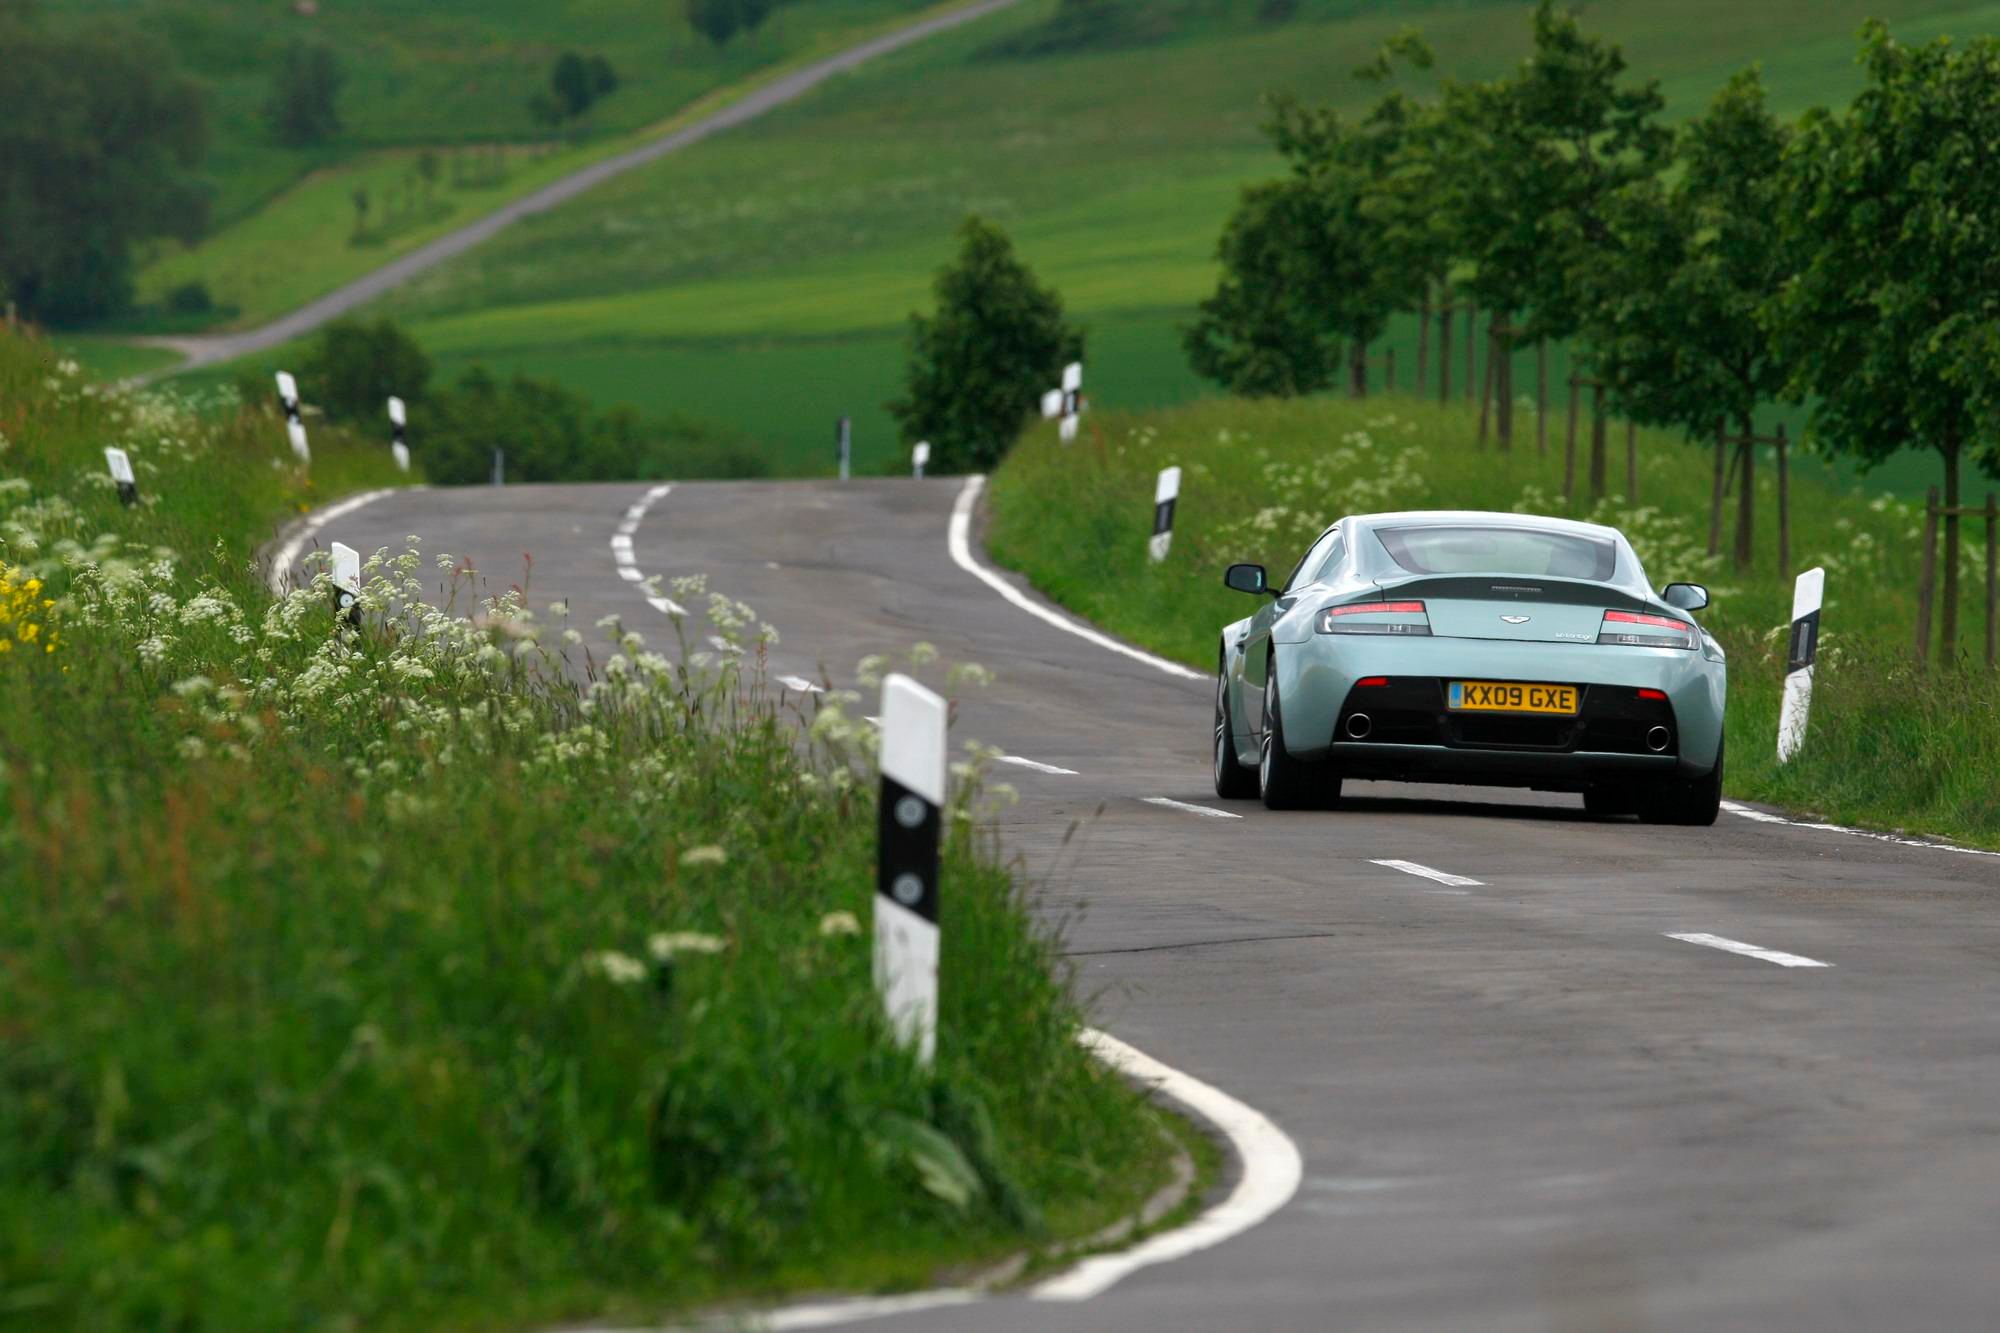 2010 Aston Martin V12 Vantage